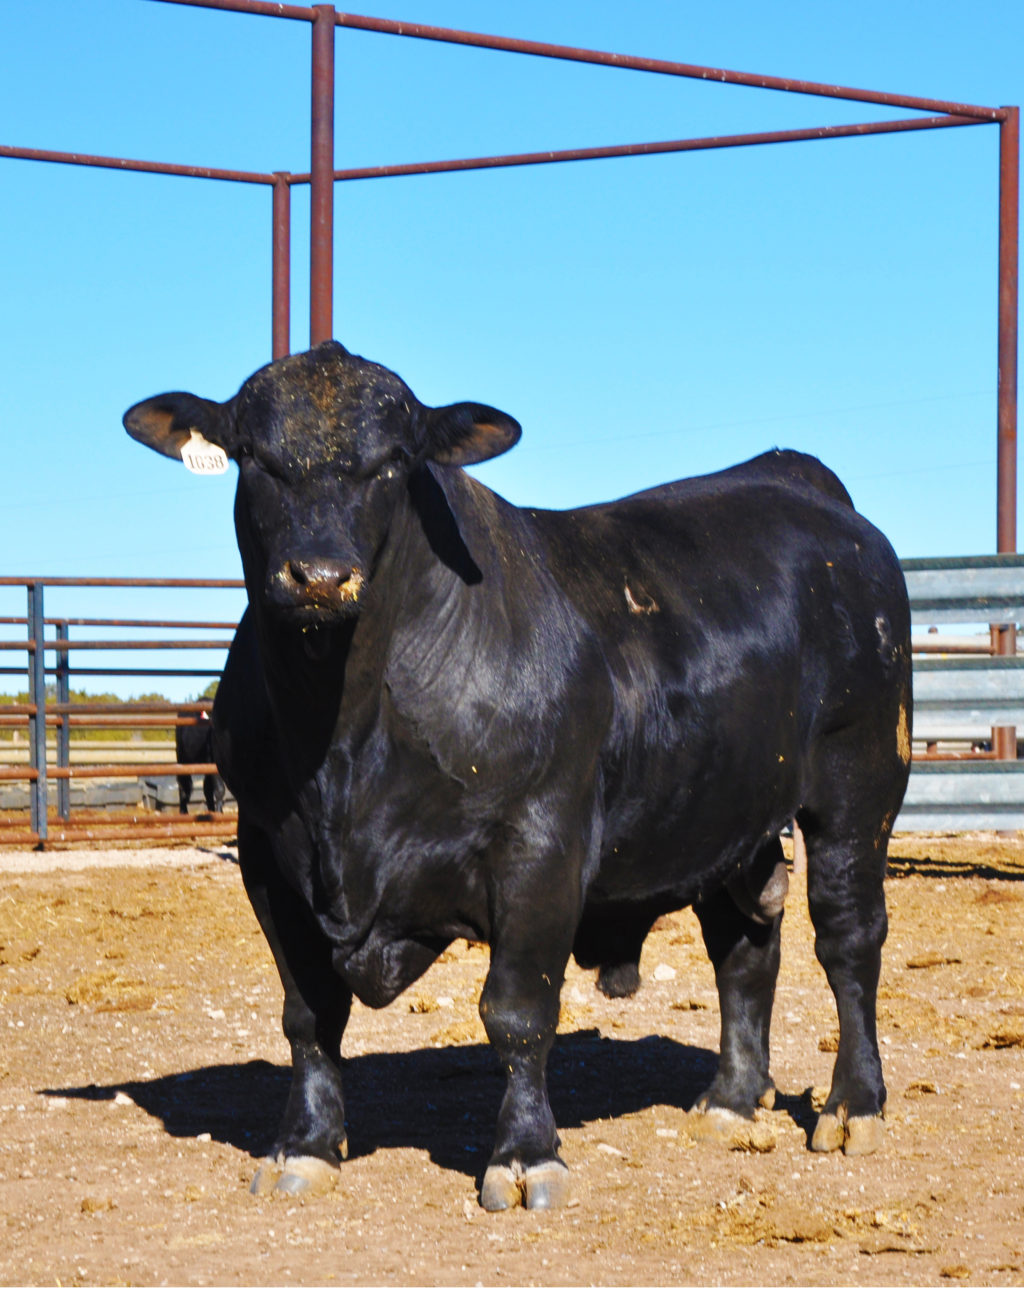 Brangus Bull - Texas Landowners Association